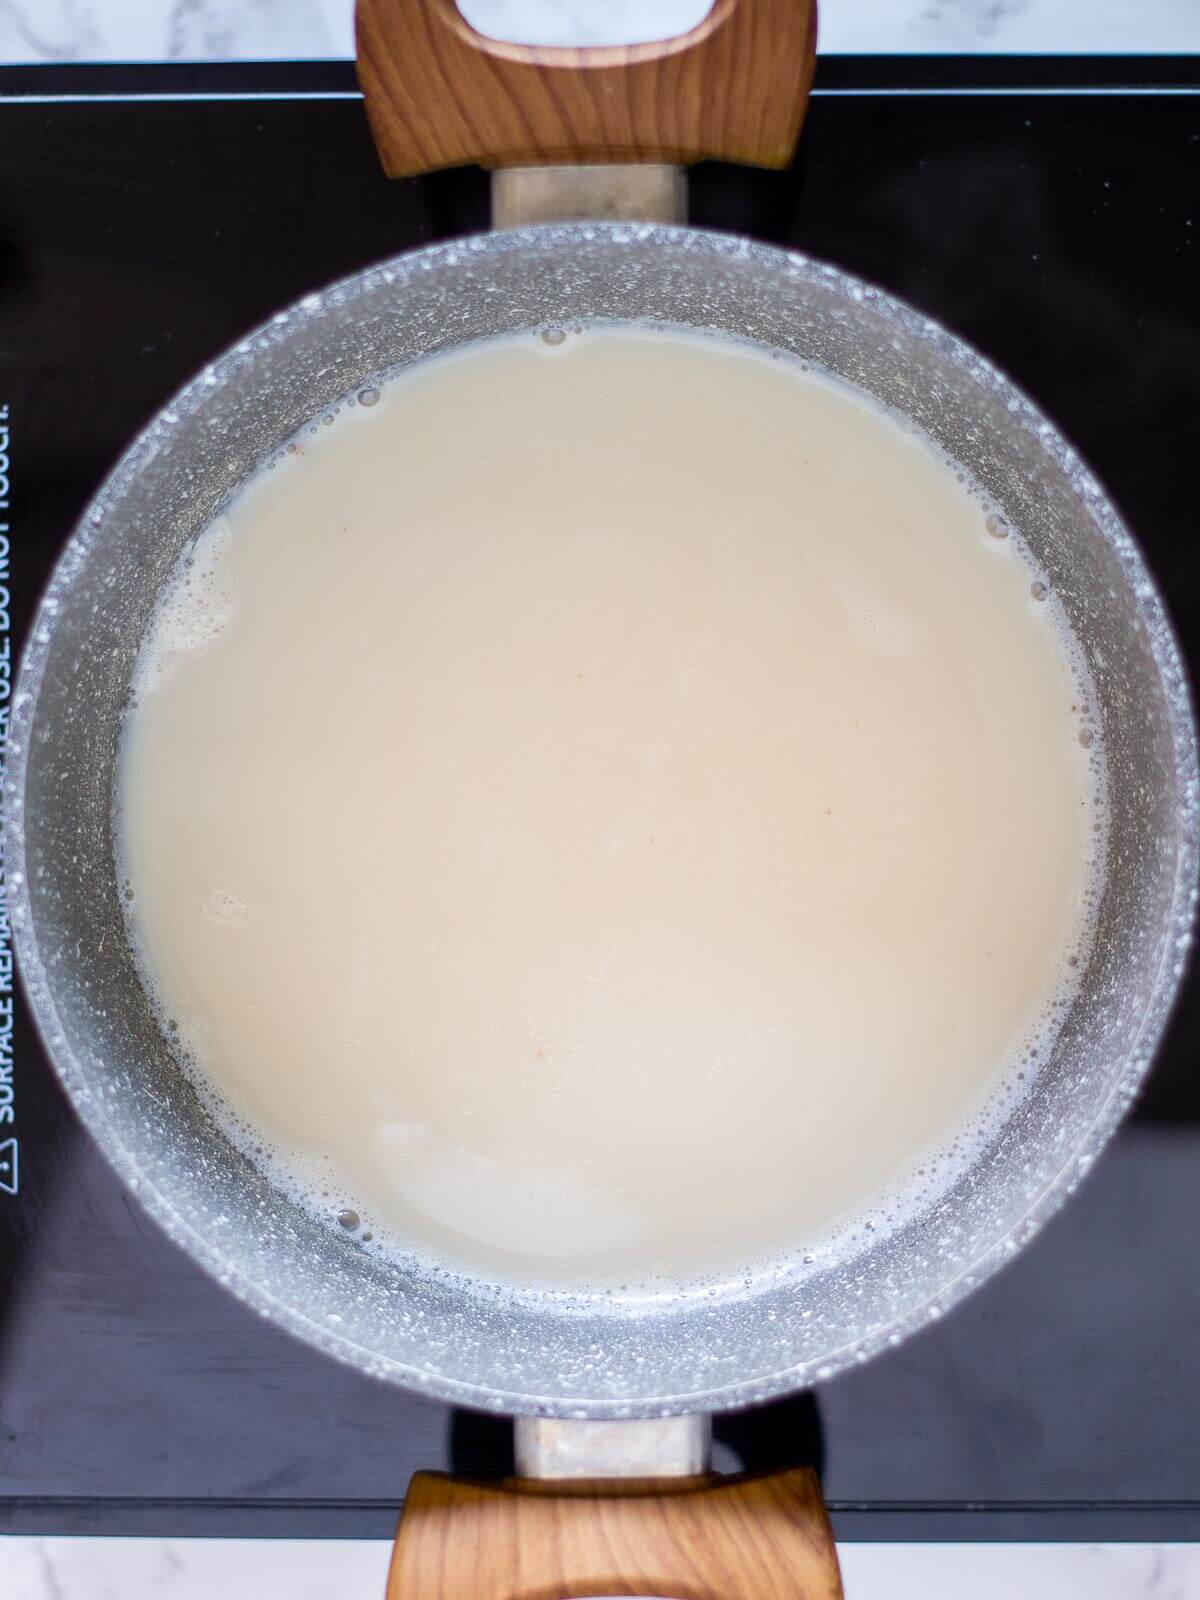 warming soy milk in saucepan.